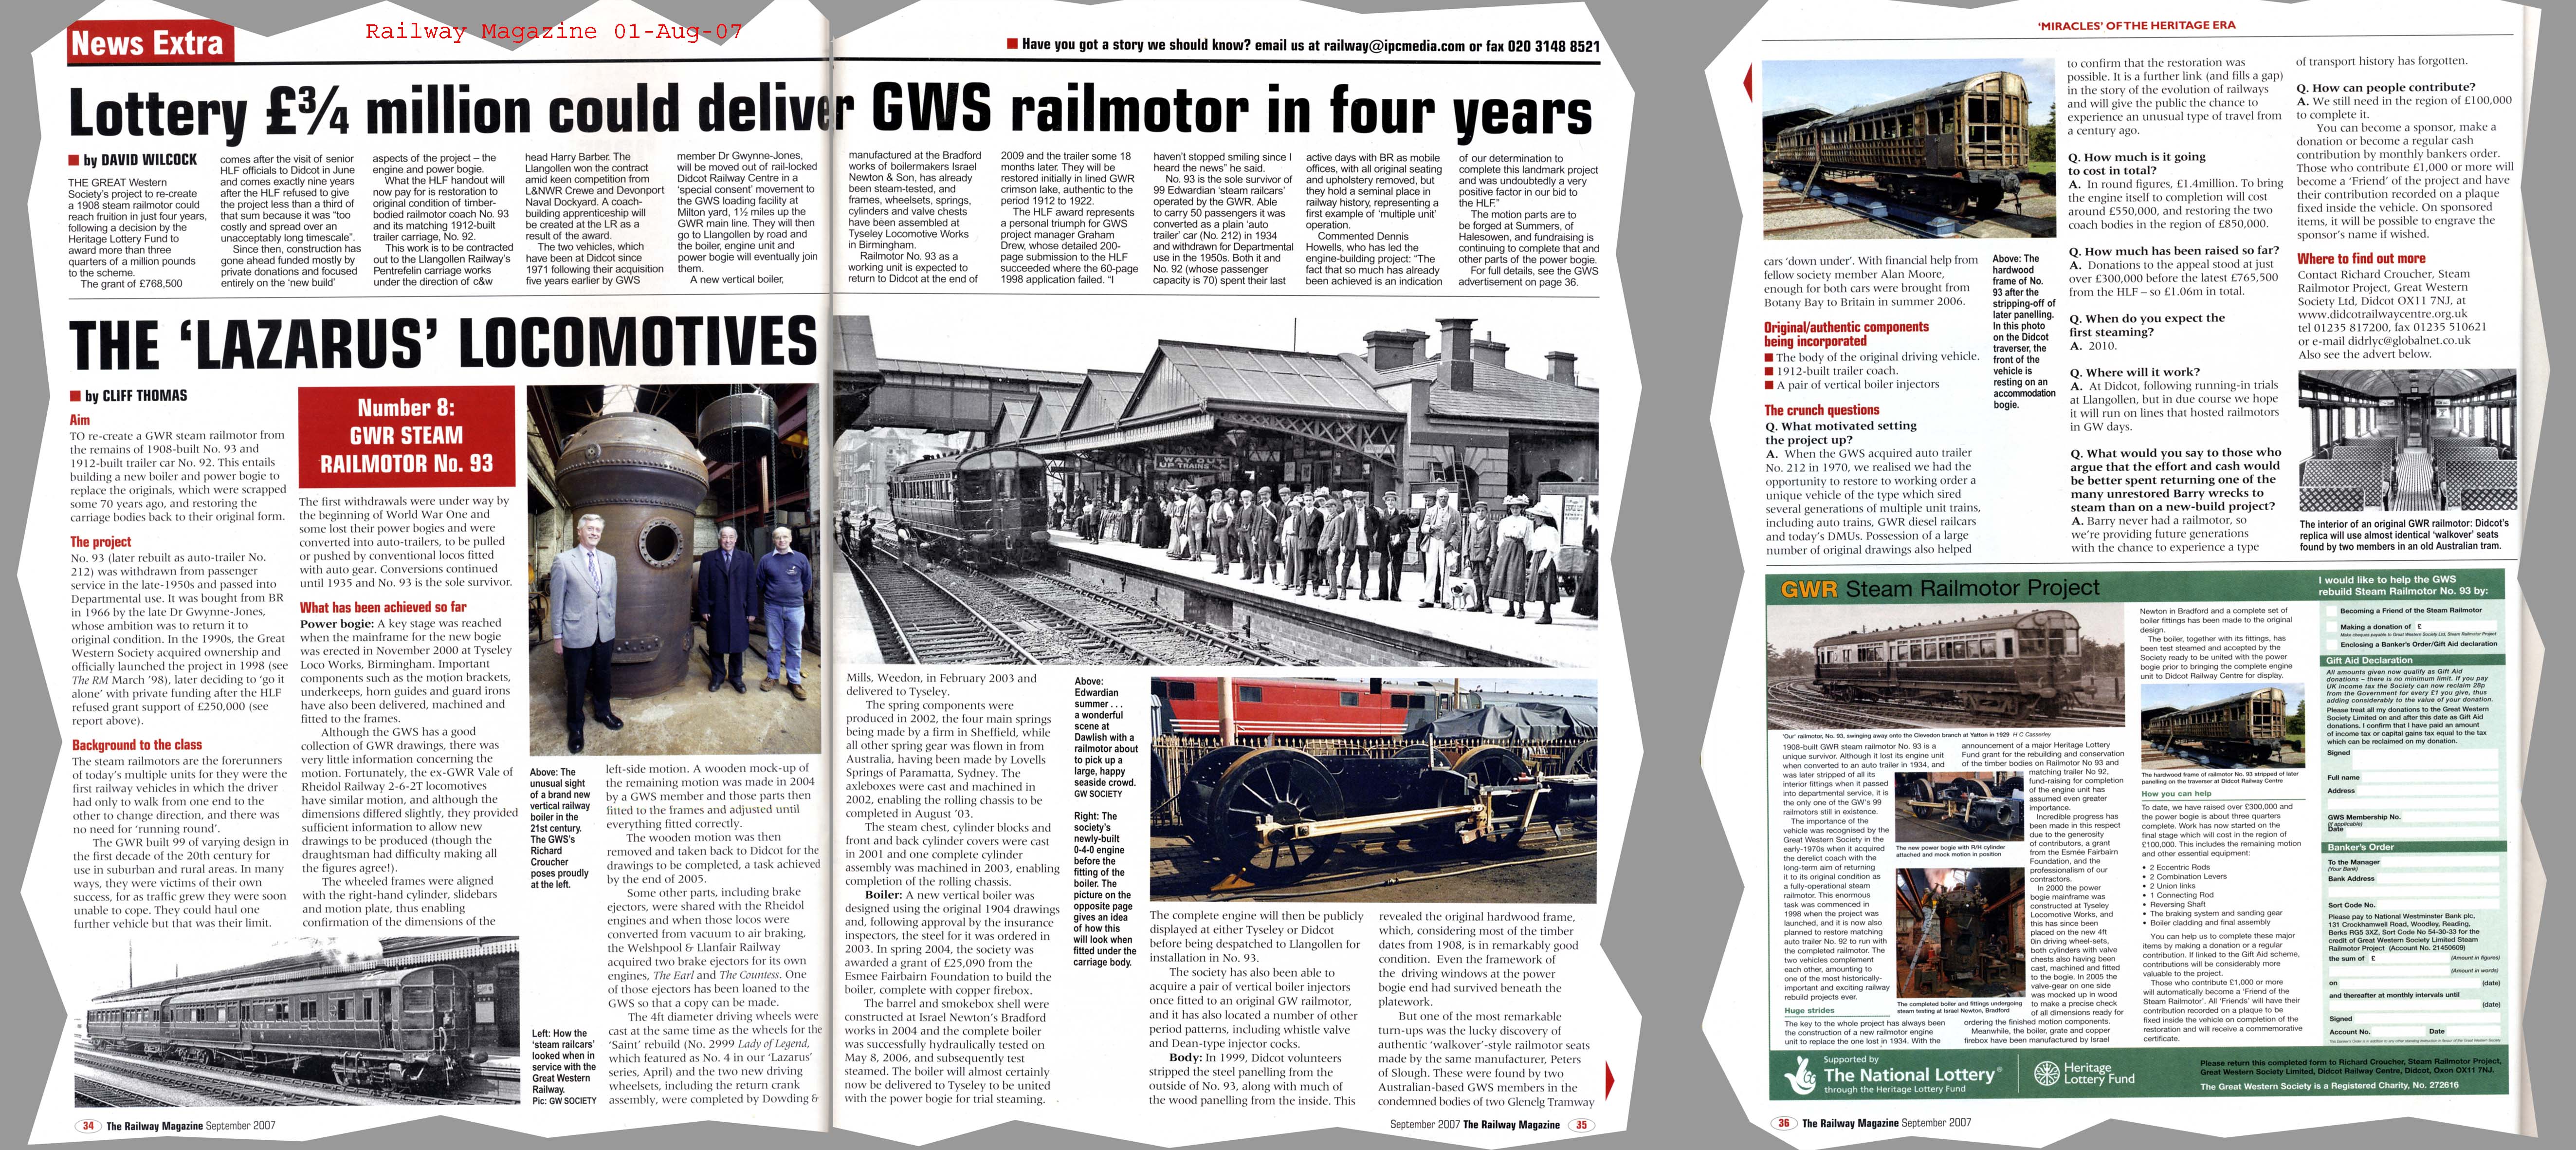 Railway Magazine 01-08-07